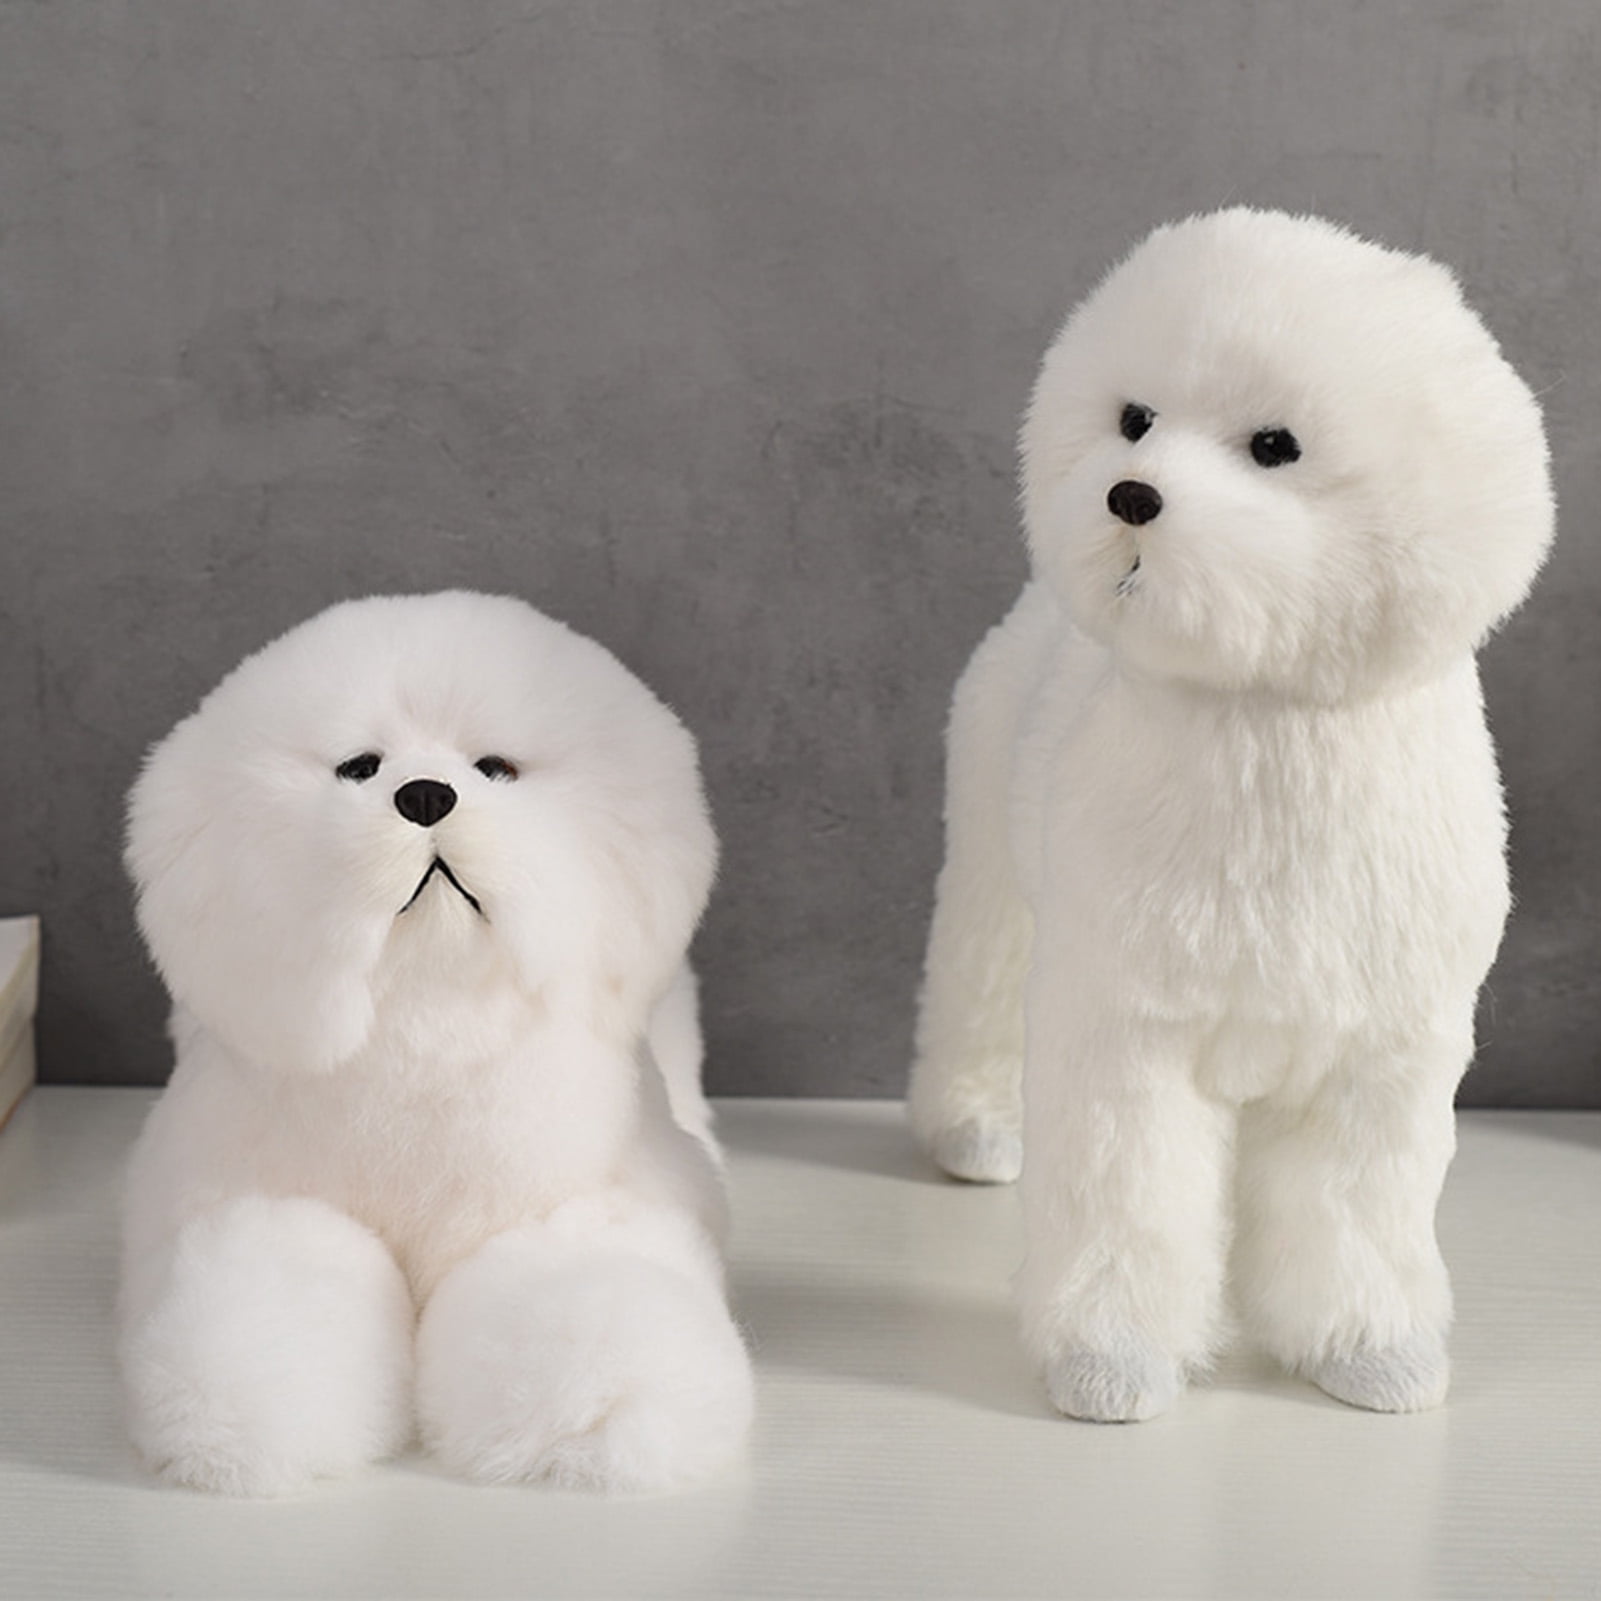 Plush Bichon Frise Soft Cute Stuffed Dog Puppy Collectible Handmade Toy Gift 